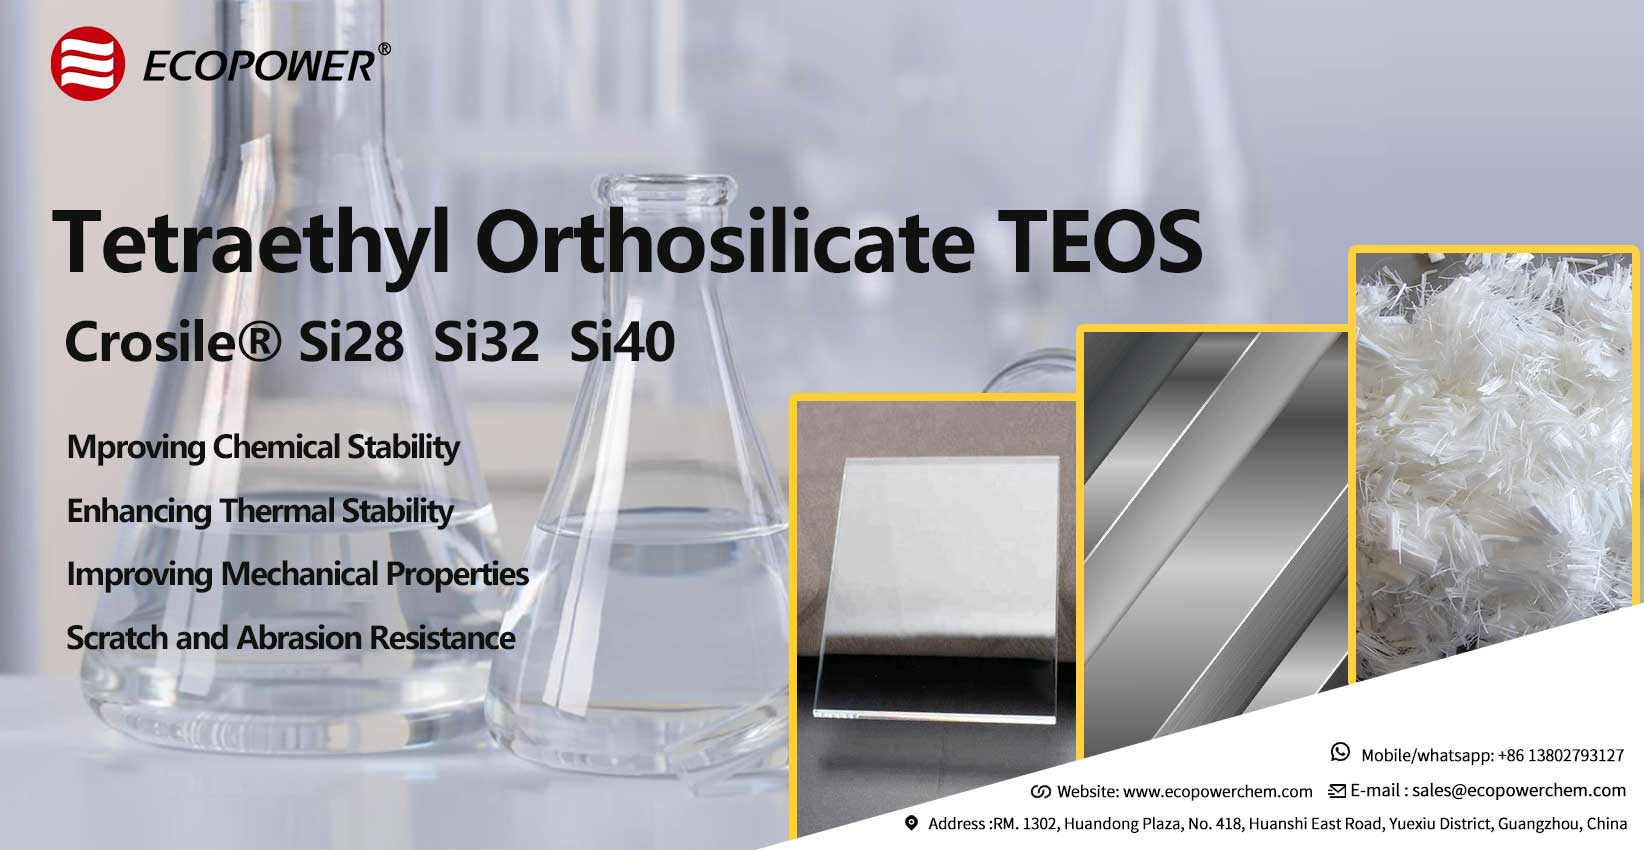 Tetraethyl Orthosilicate TEOS Crosile Si28 Si32 Si40